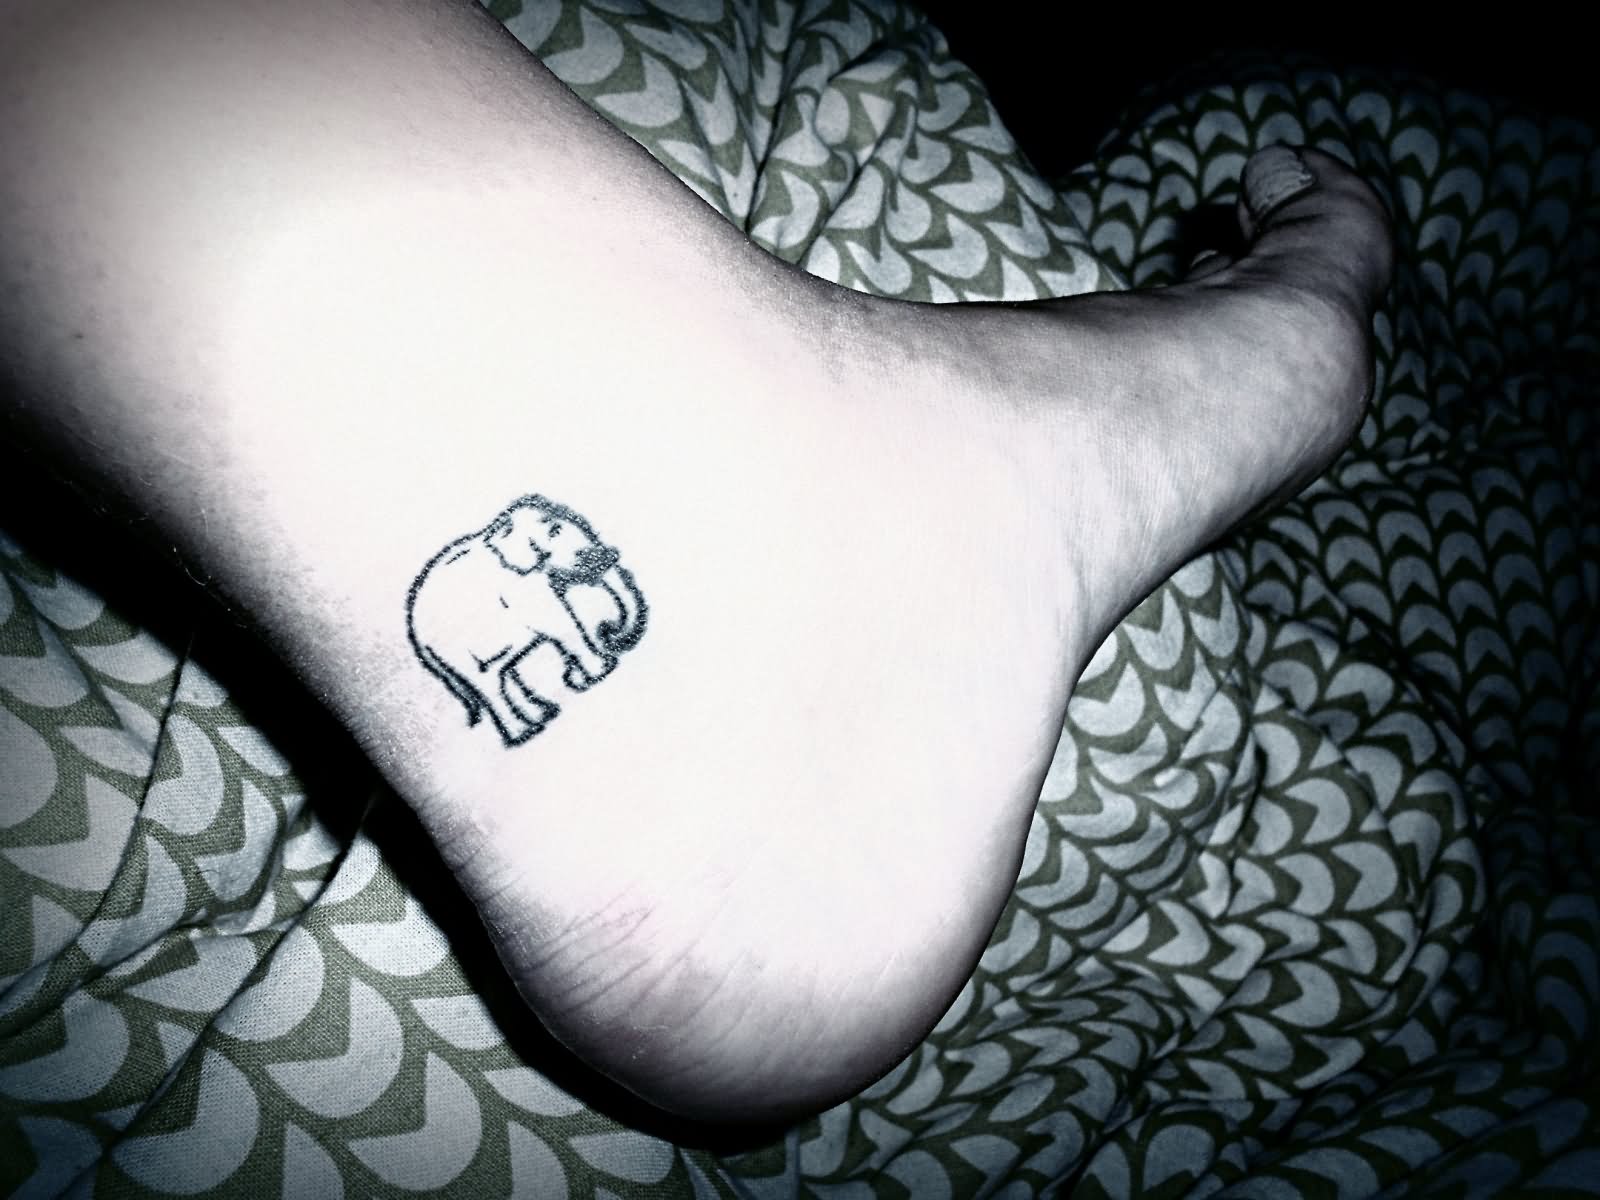 Black Ink Elephant Tattoo On Ankle